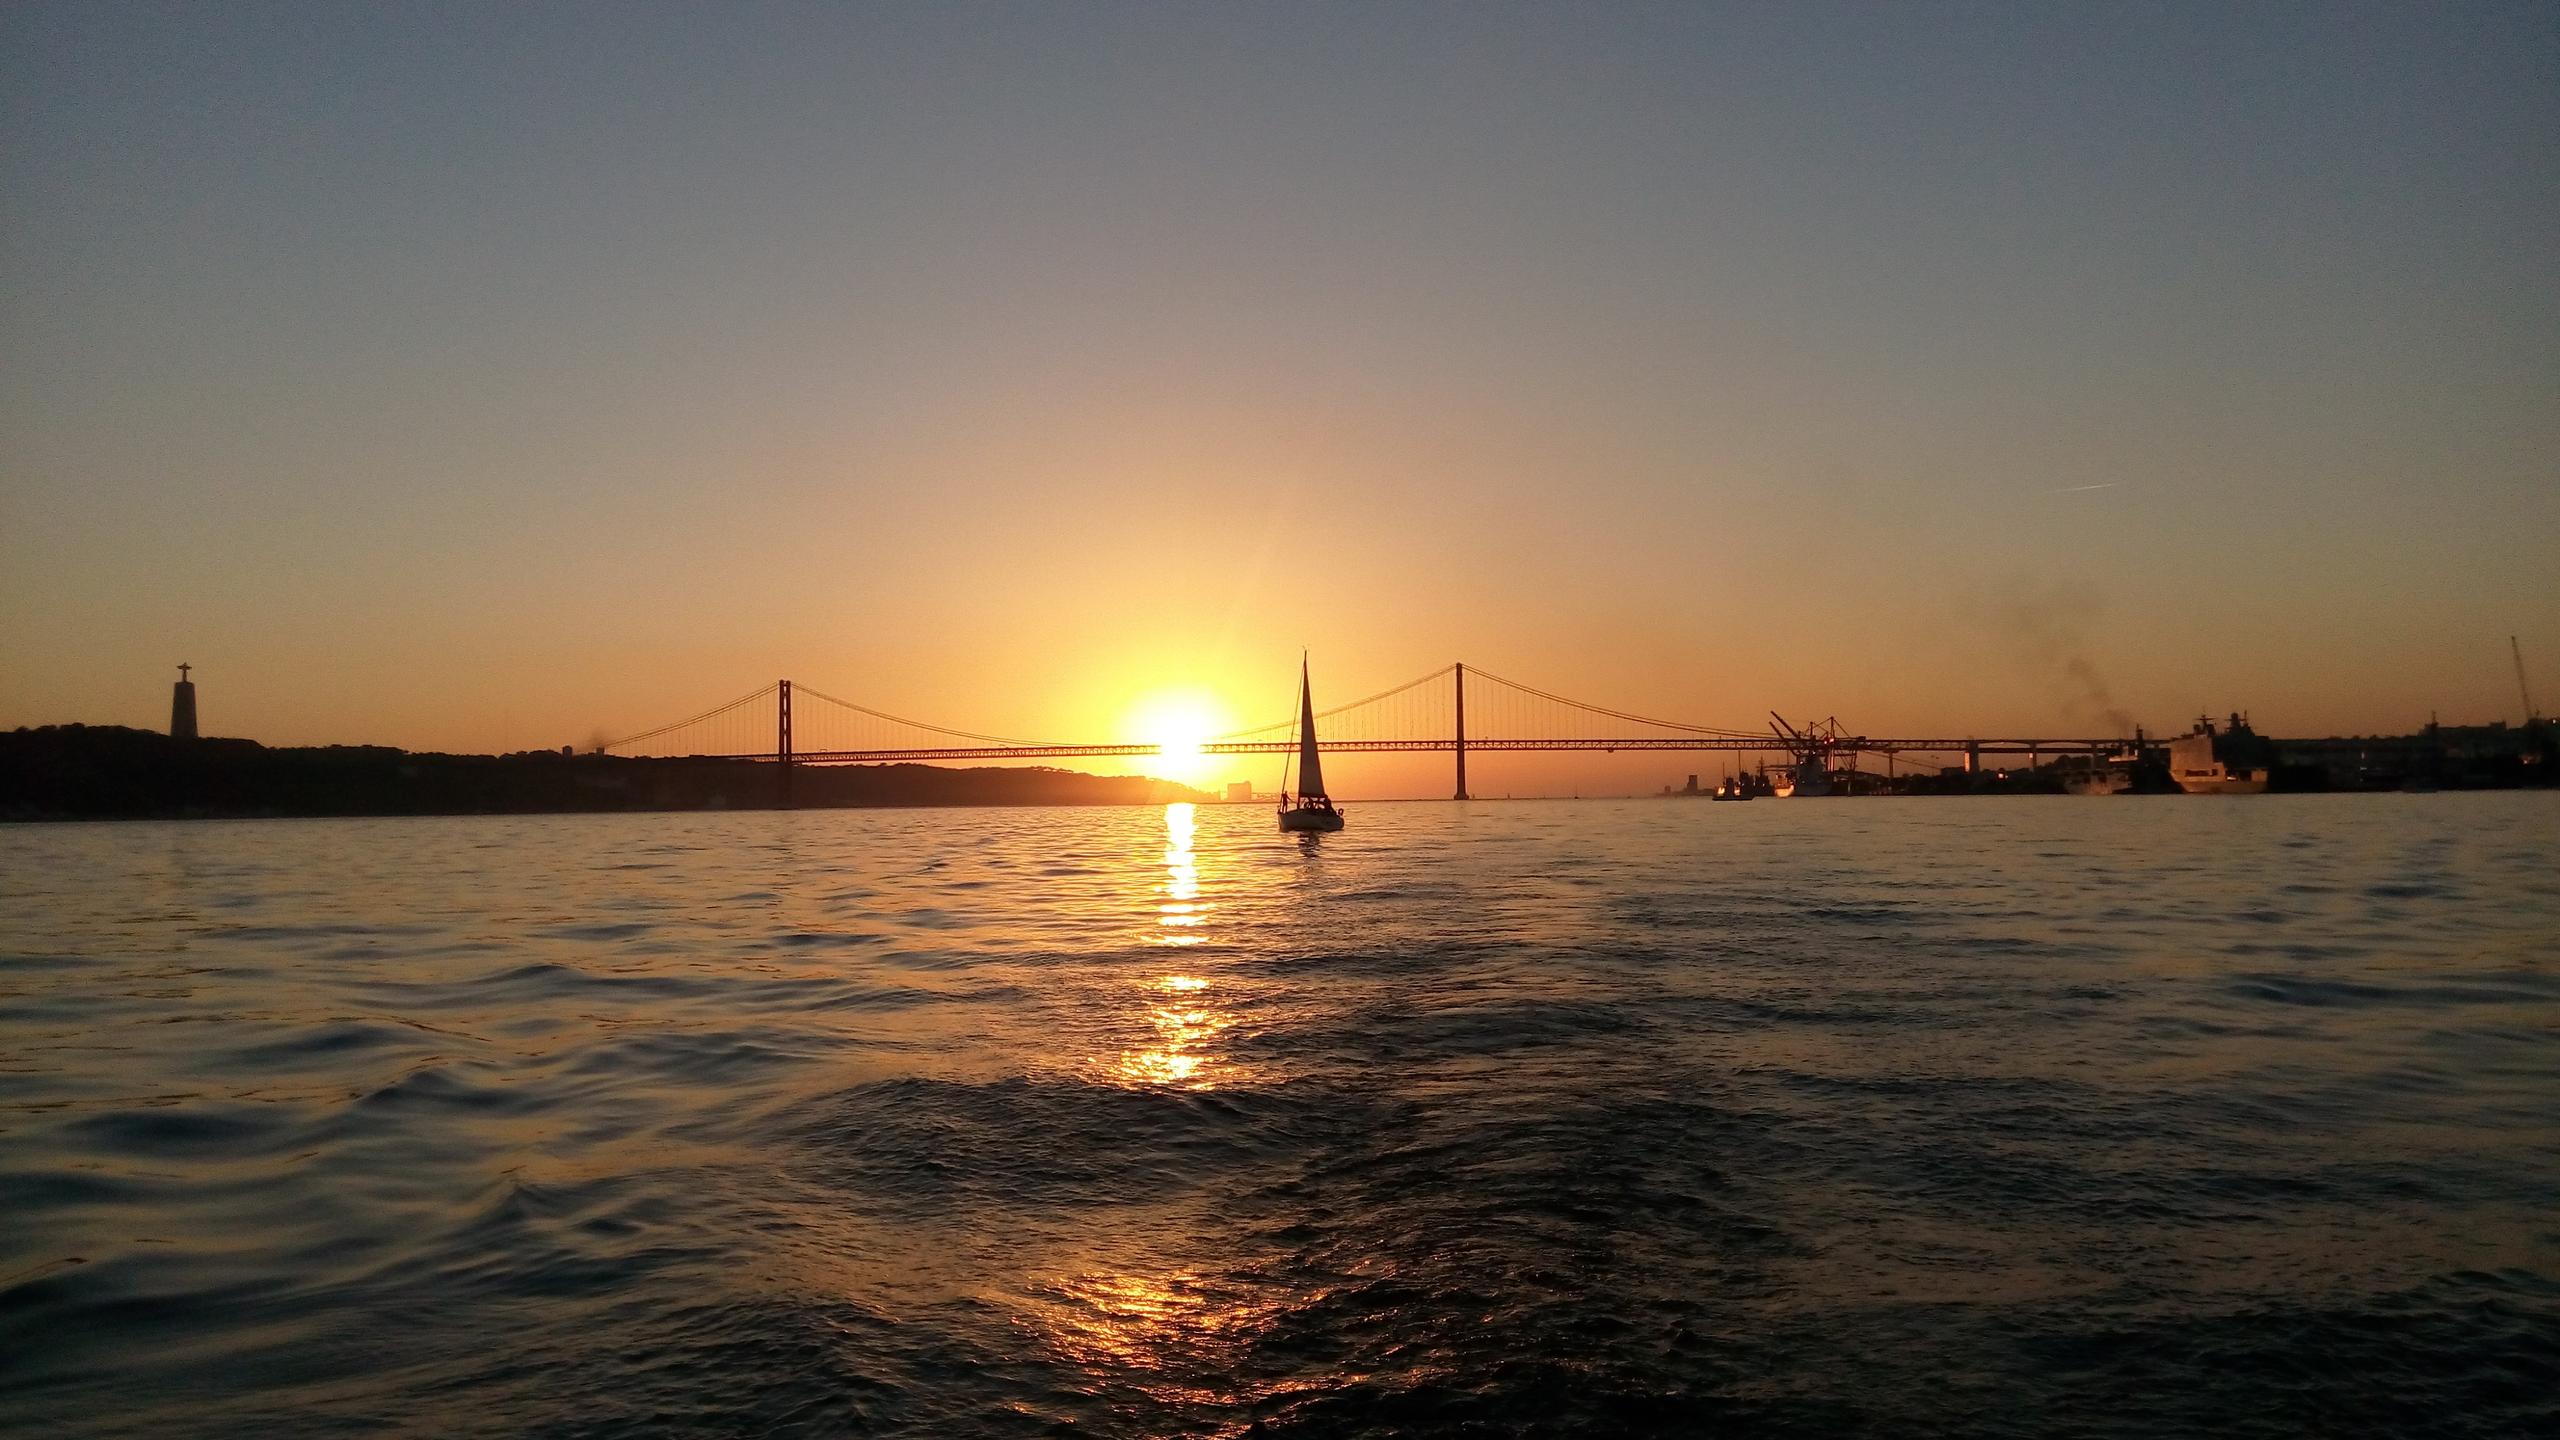 Sunset on a Yacht in Lisbon